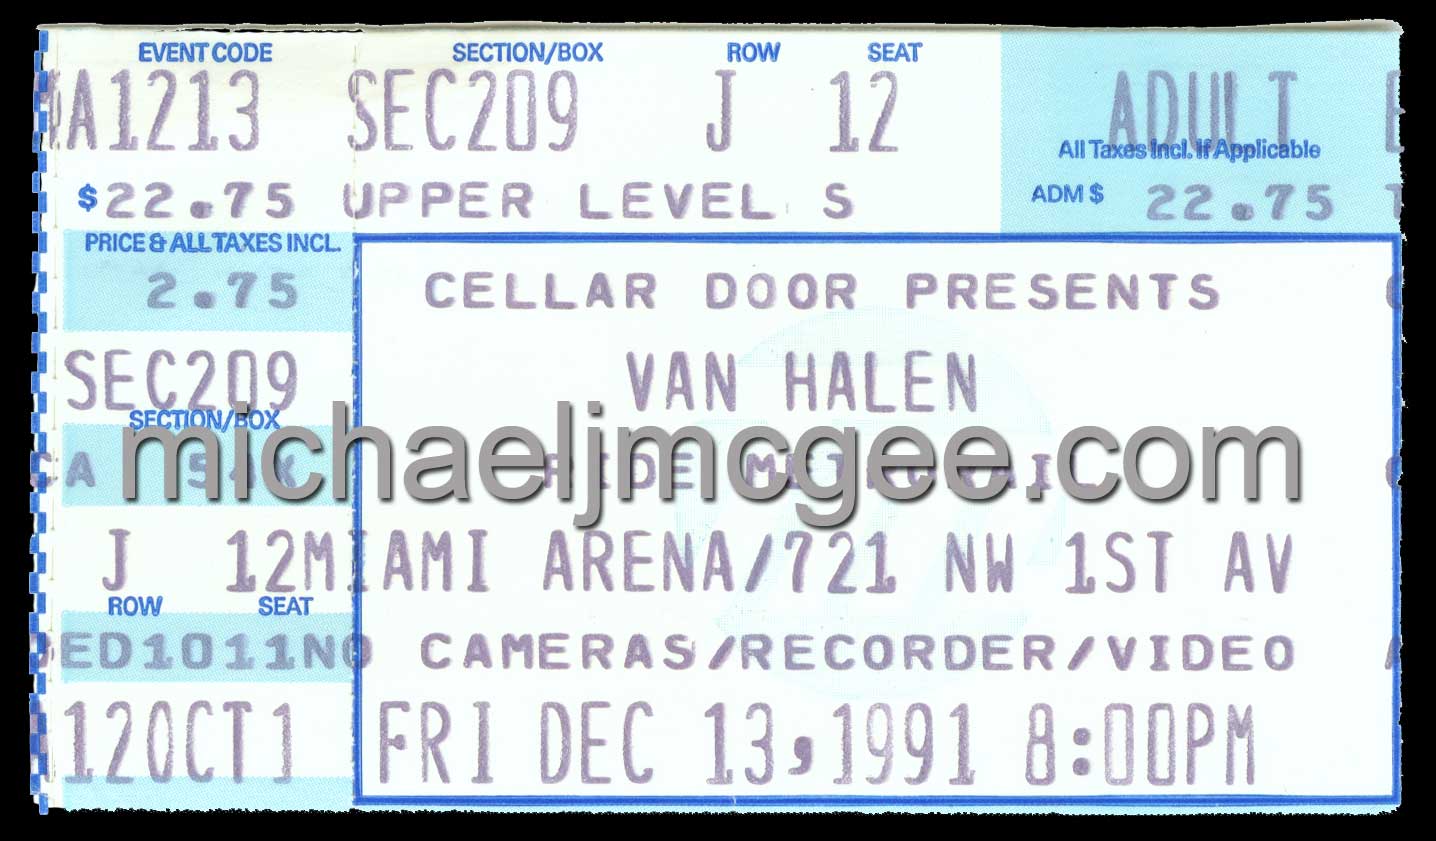 Eddie Van Halen / michaeljmcgee.com